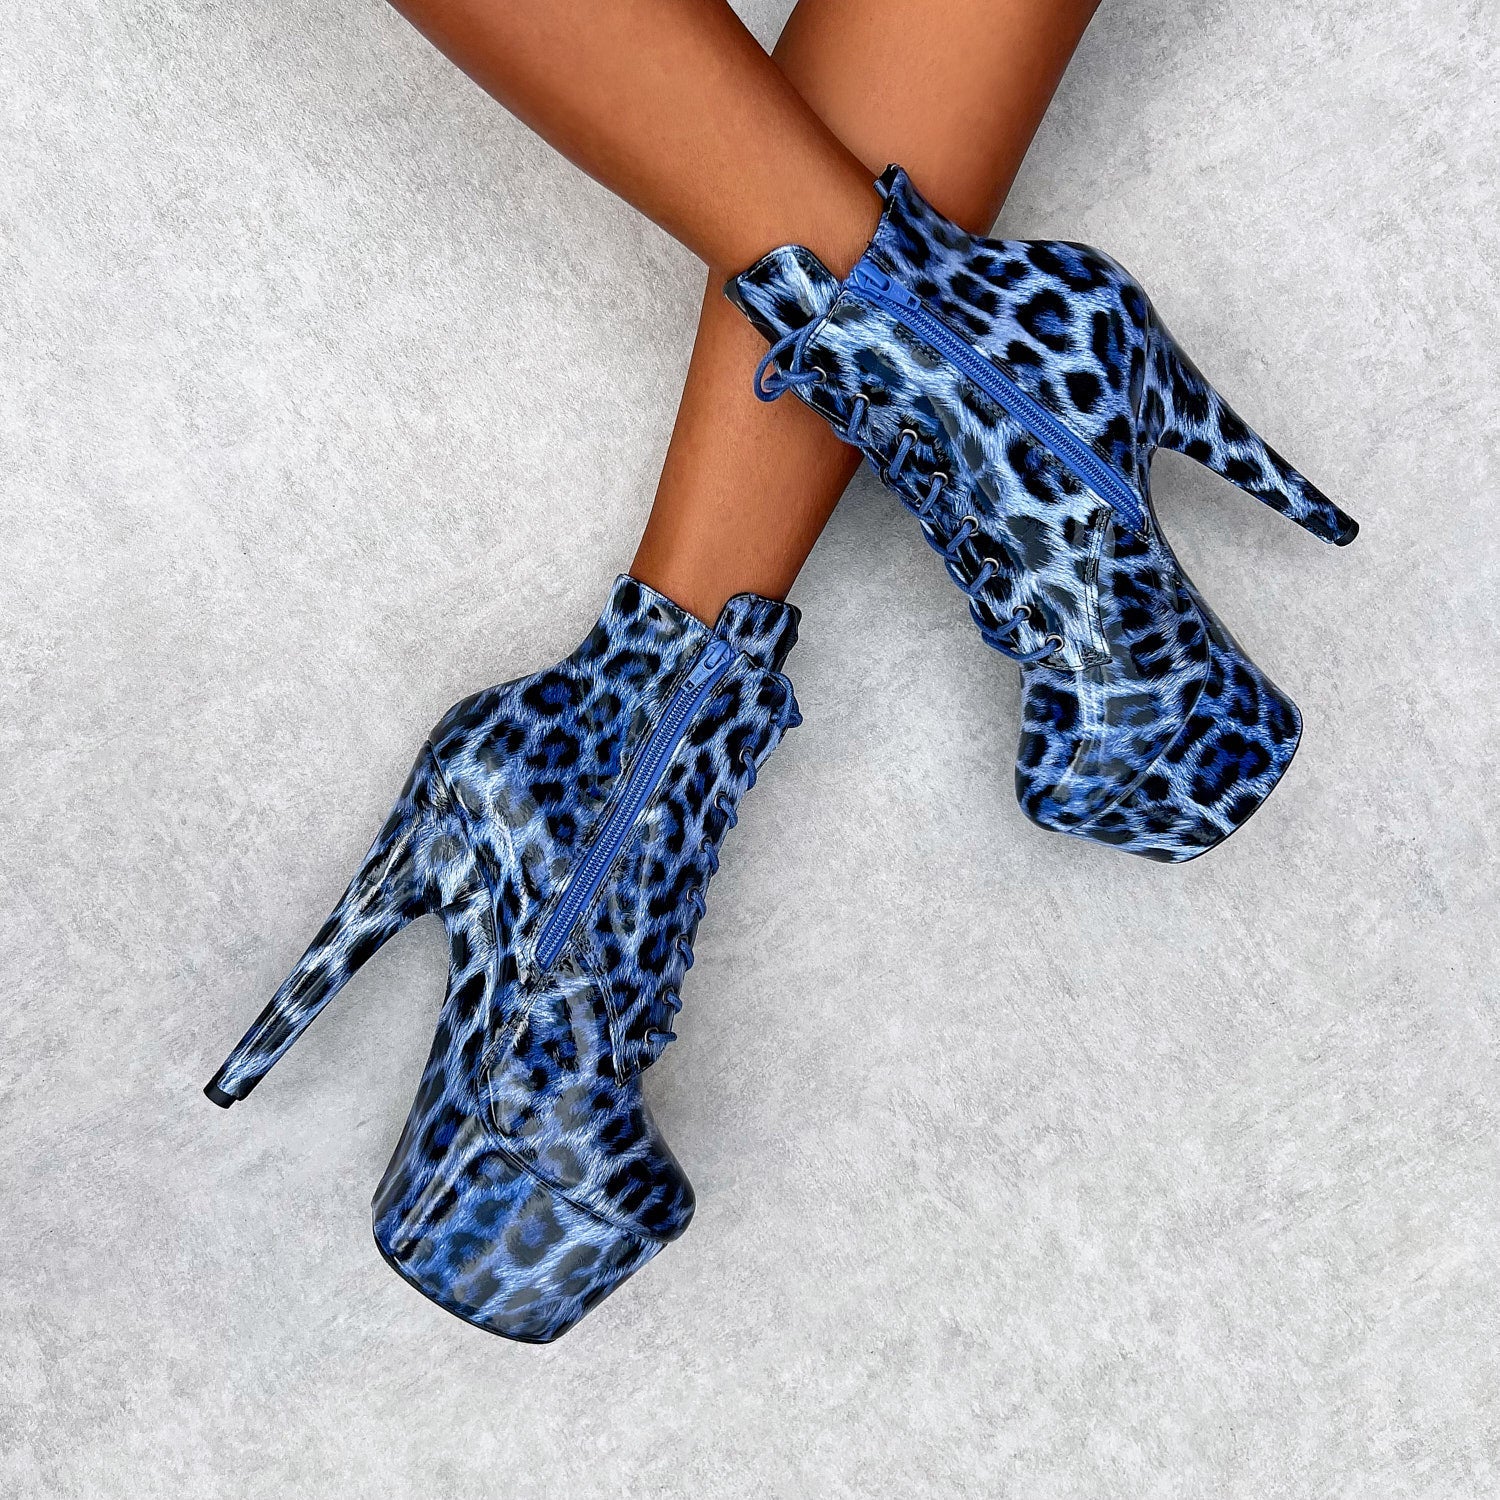 Blue Leopard Ankle Boot - 7 INCH, stripper shoe, stripper heel, pole heel, not a pleaser, platform, dancer, pole dance, floor work